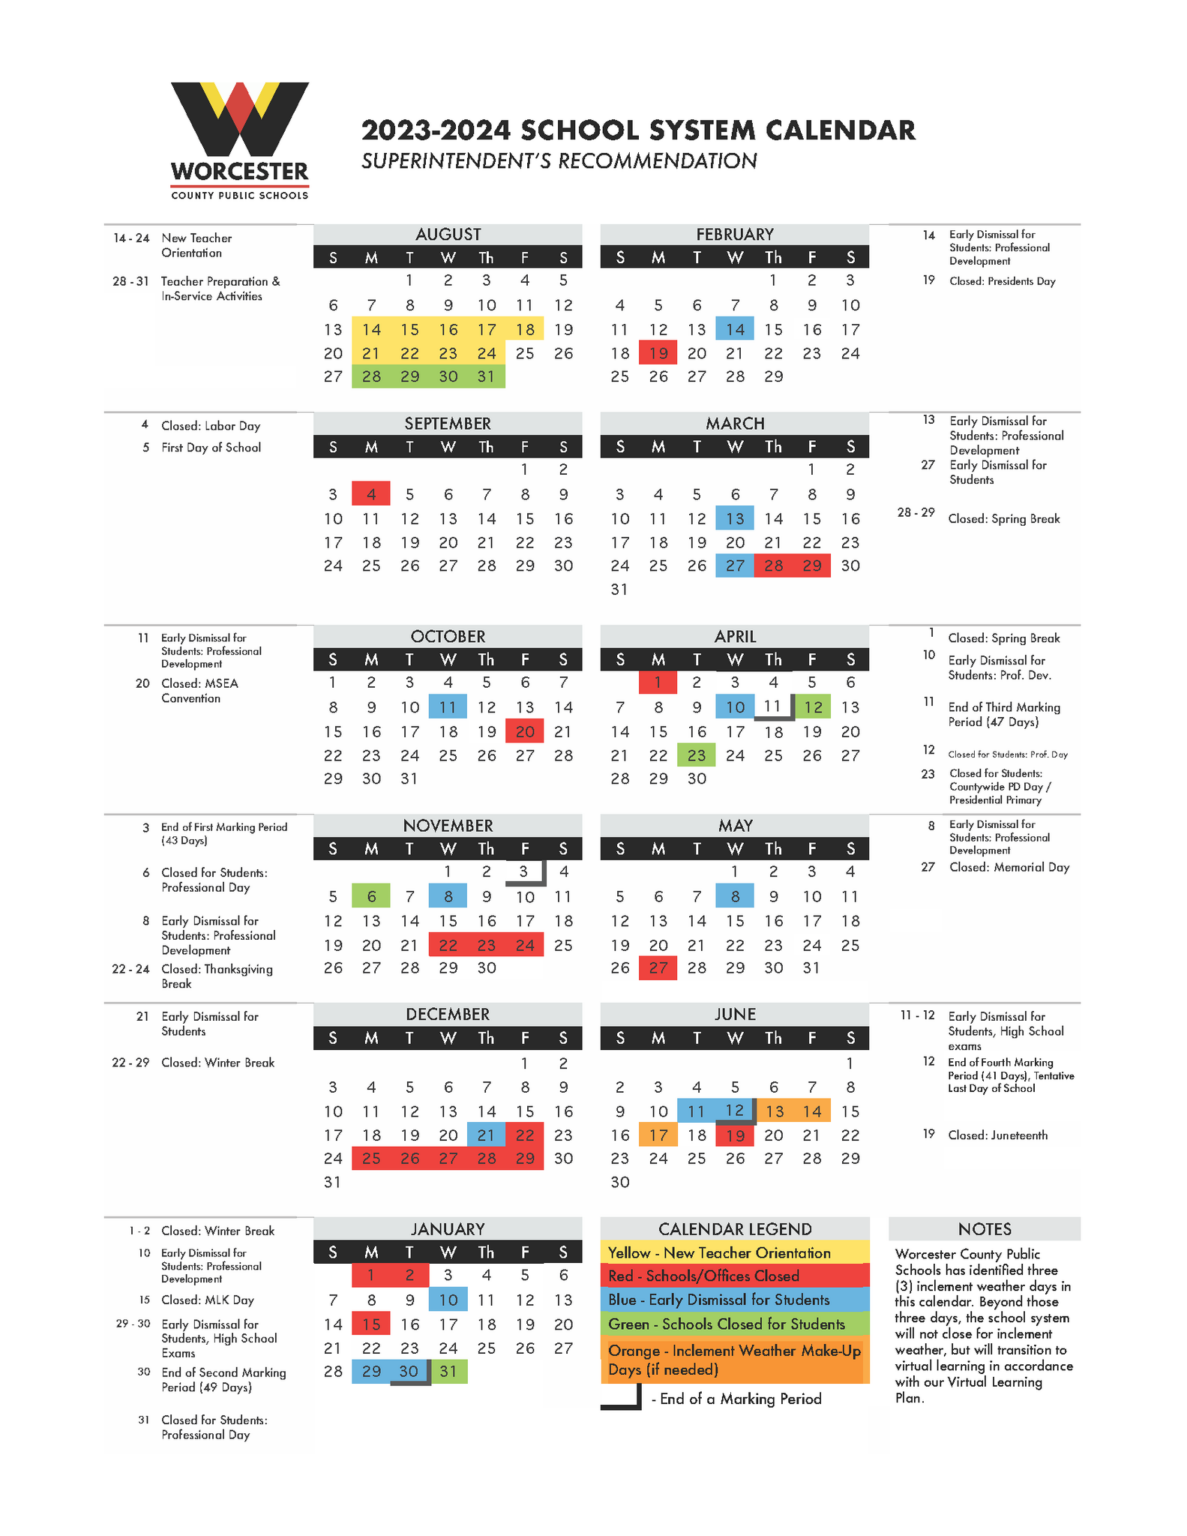 02/22/2023 | WCPS Approves 2023-2024 School Calendar | News Ocean City MD